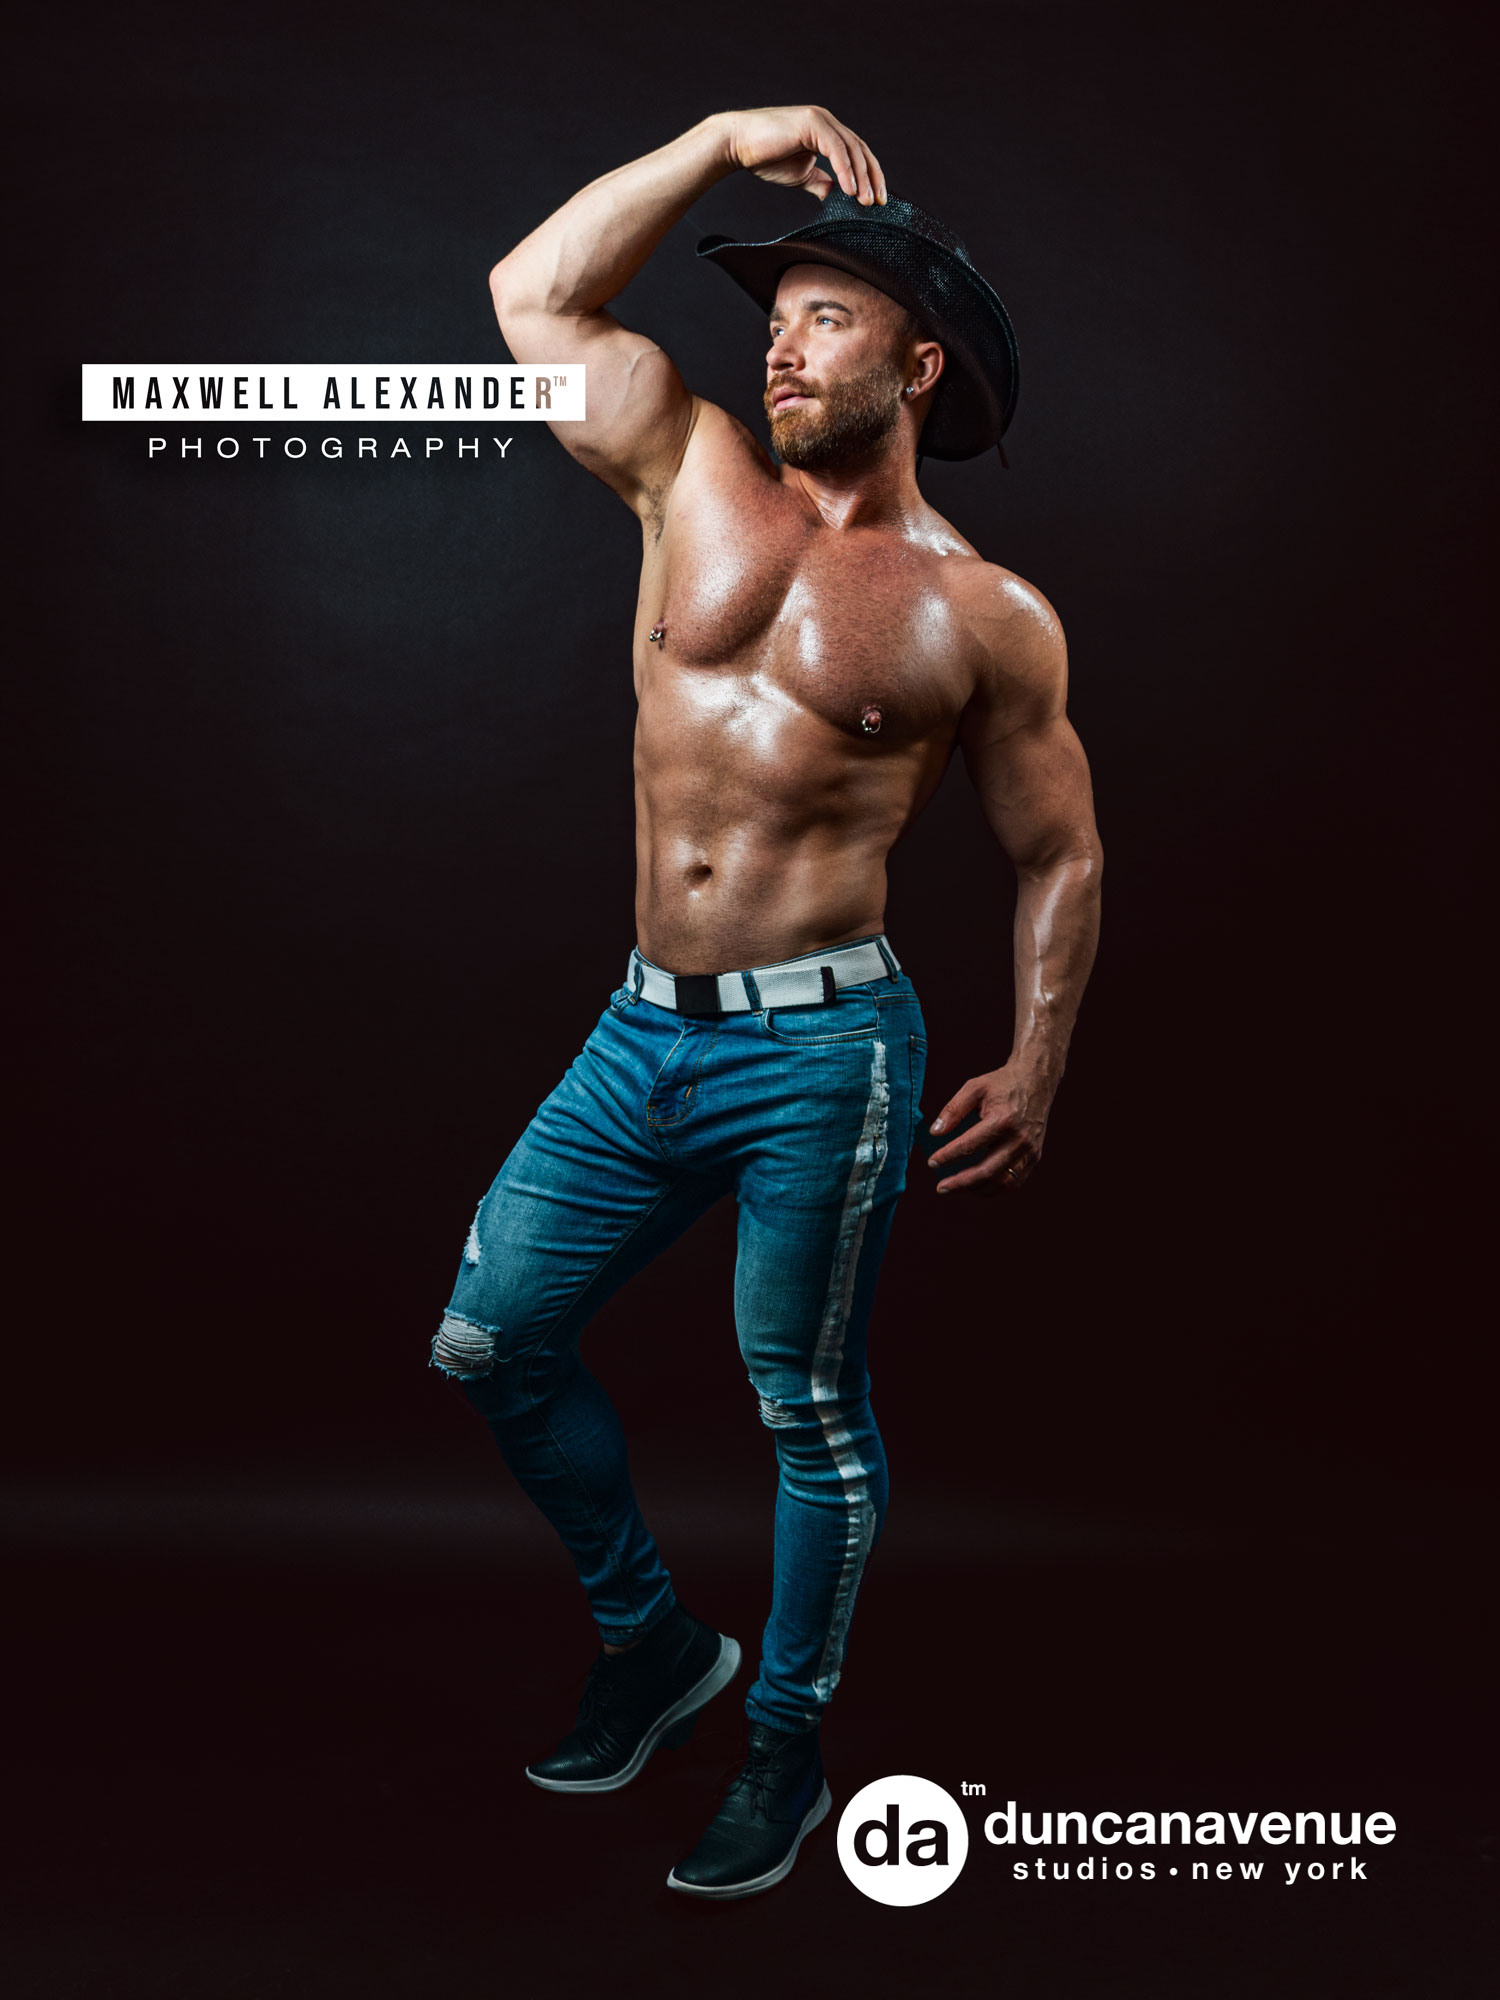 Bodybuilding / Fitness Lifestyle Photography Portfolio – Photographer Maxwell Alexander – New York